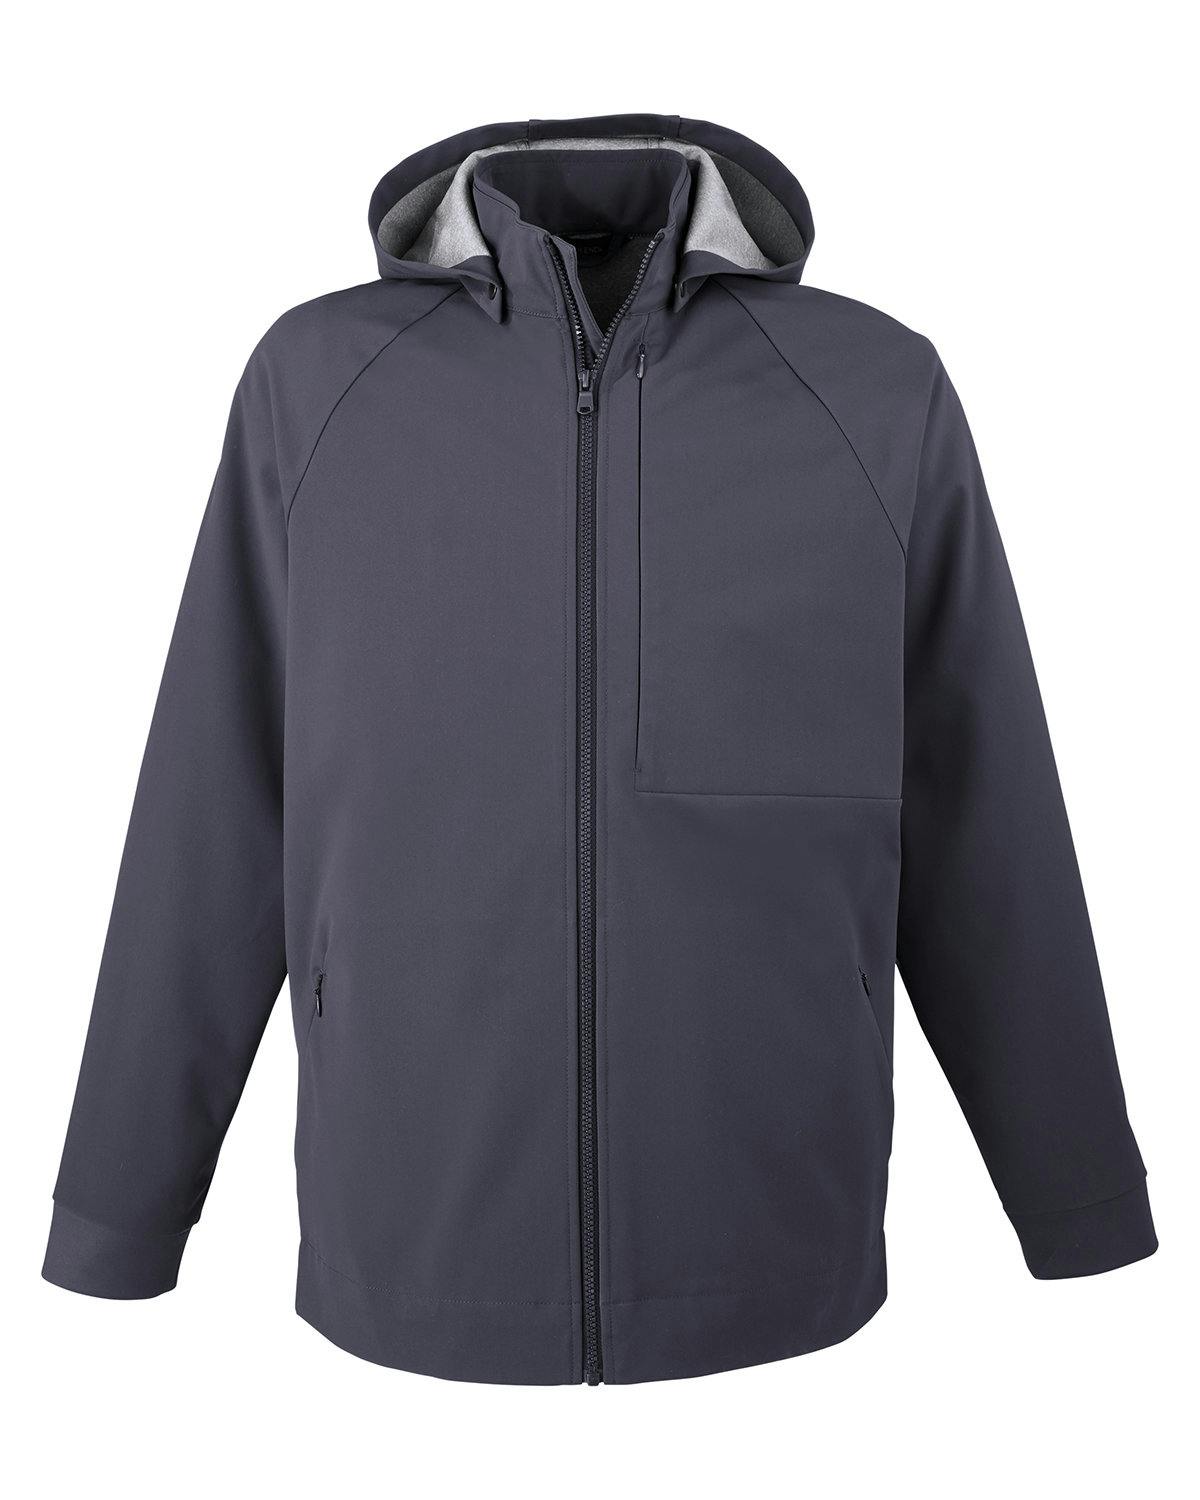 Image for Men's City Hybrid Soft Shell Hooded Jacket